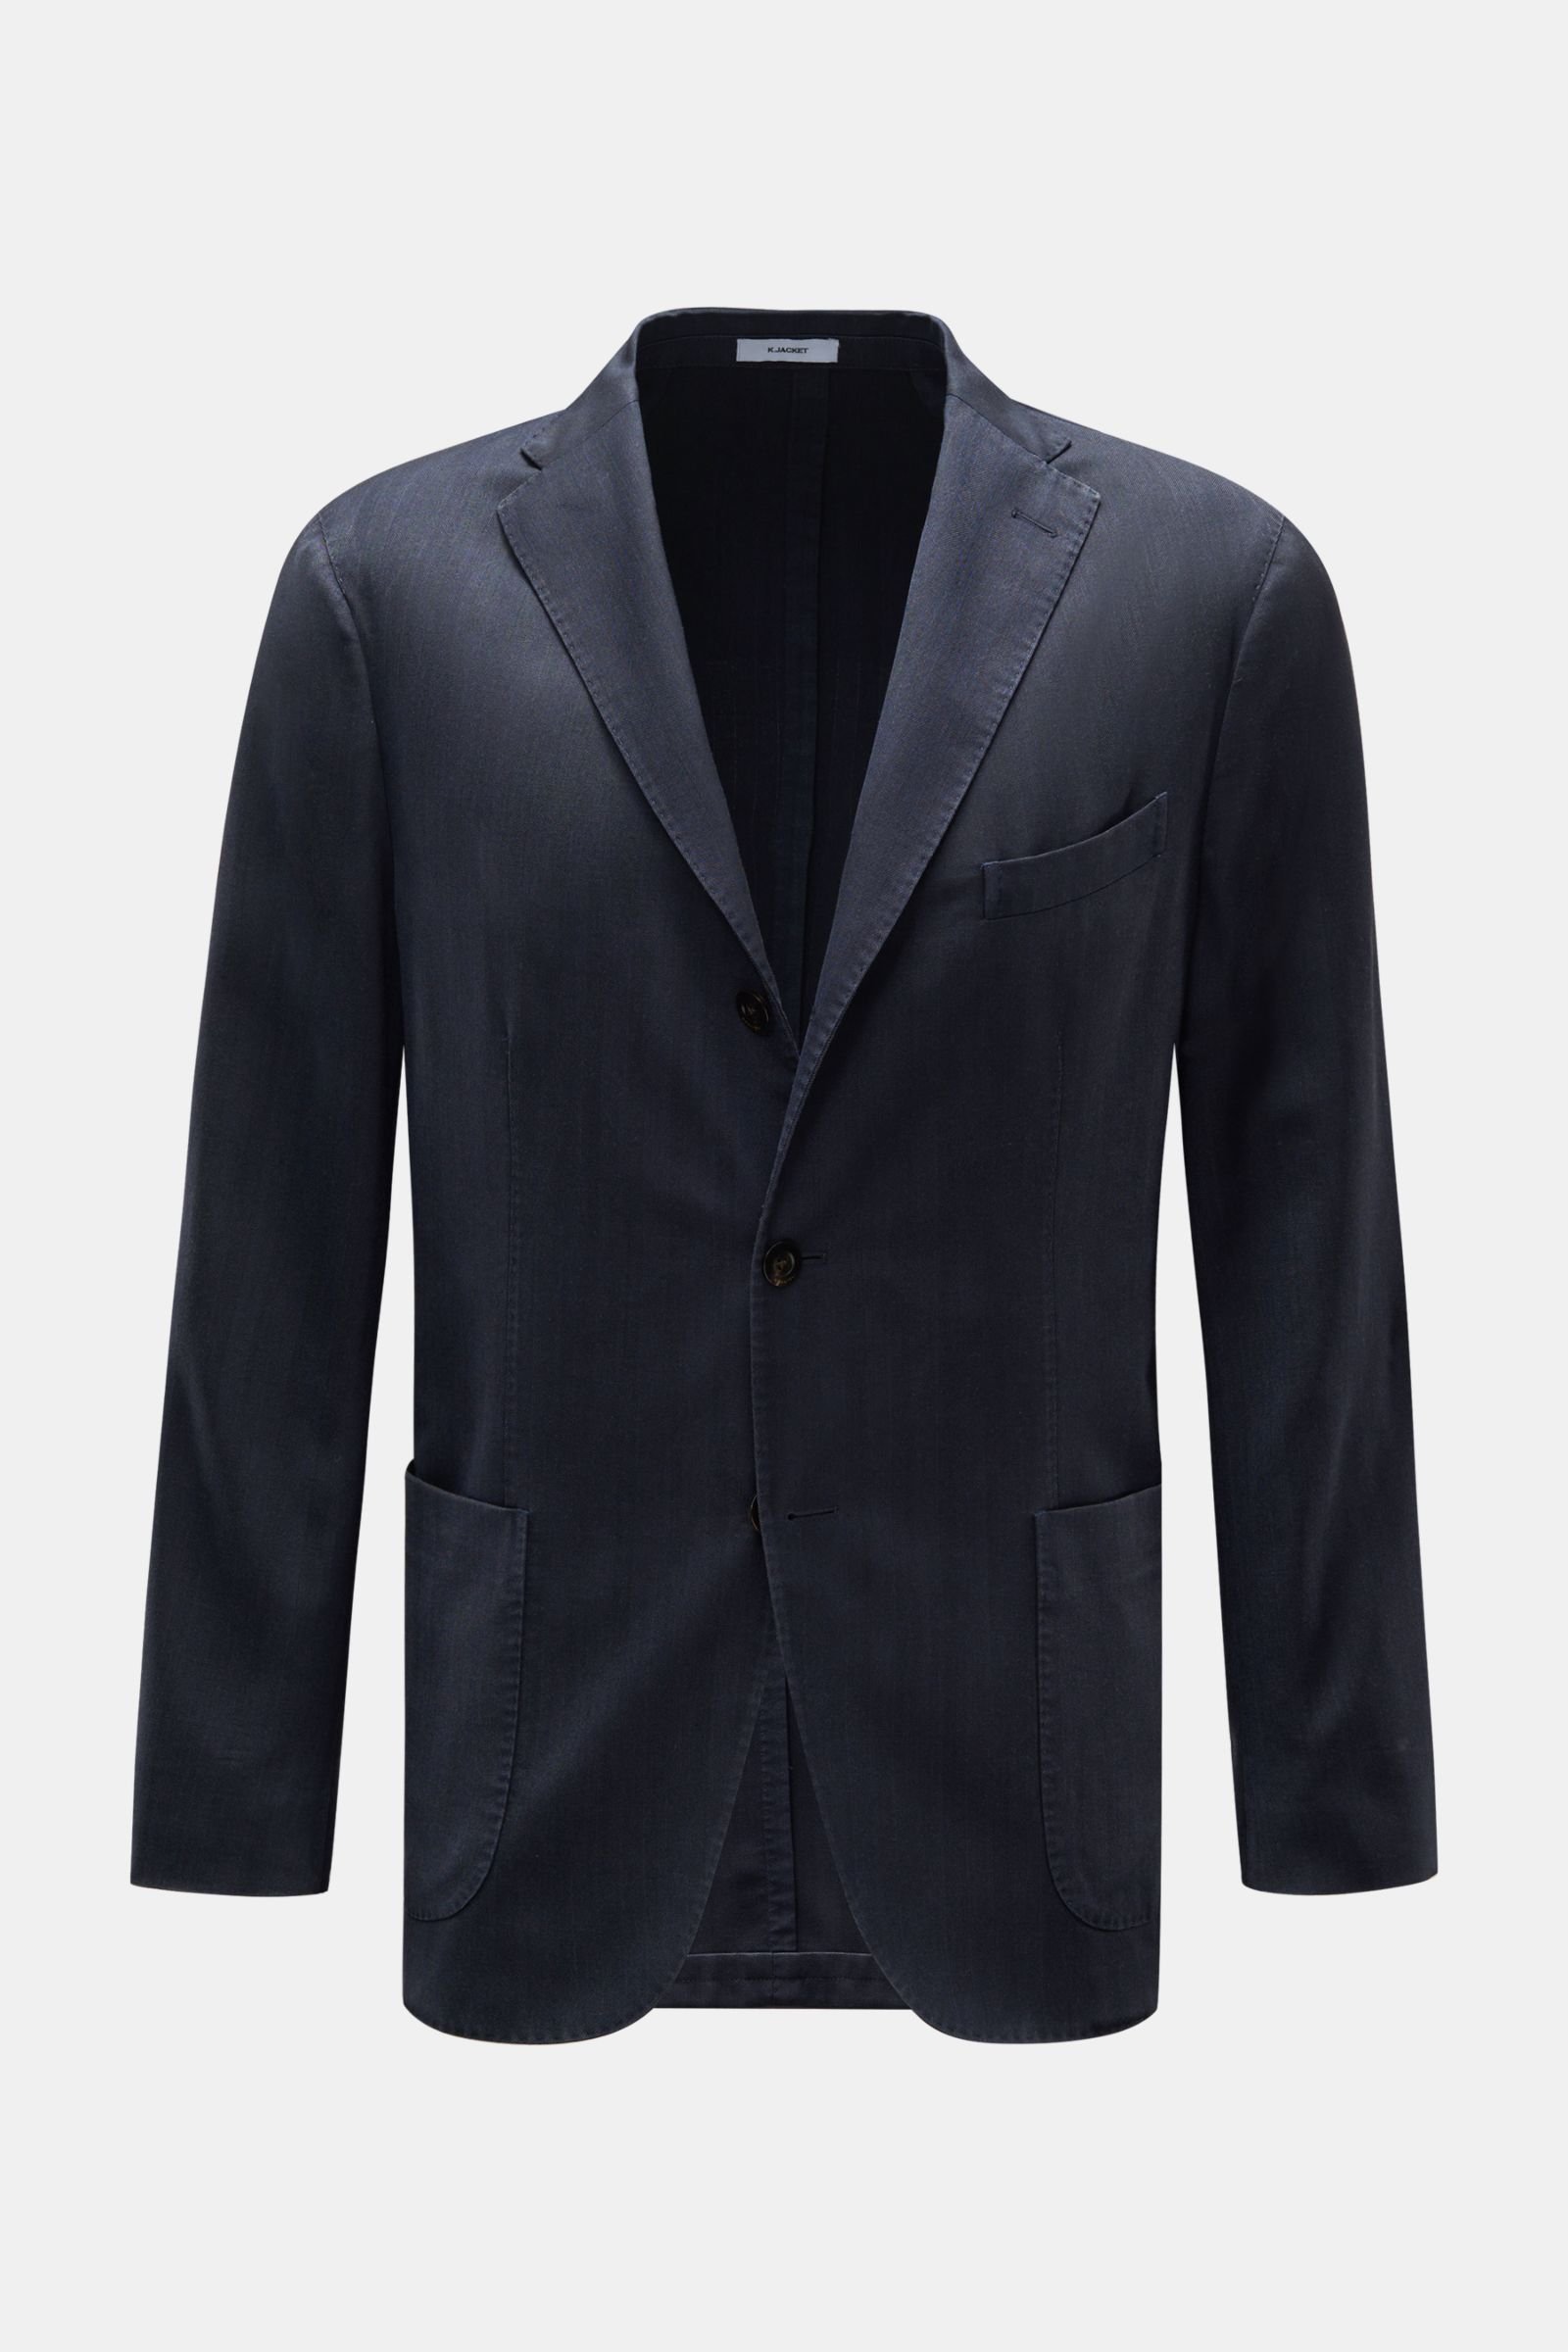 Smart-casual jacket 'K. Jacket' dark navy